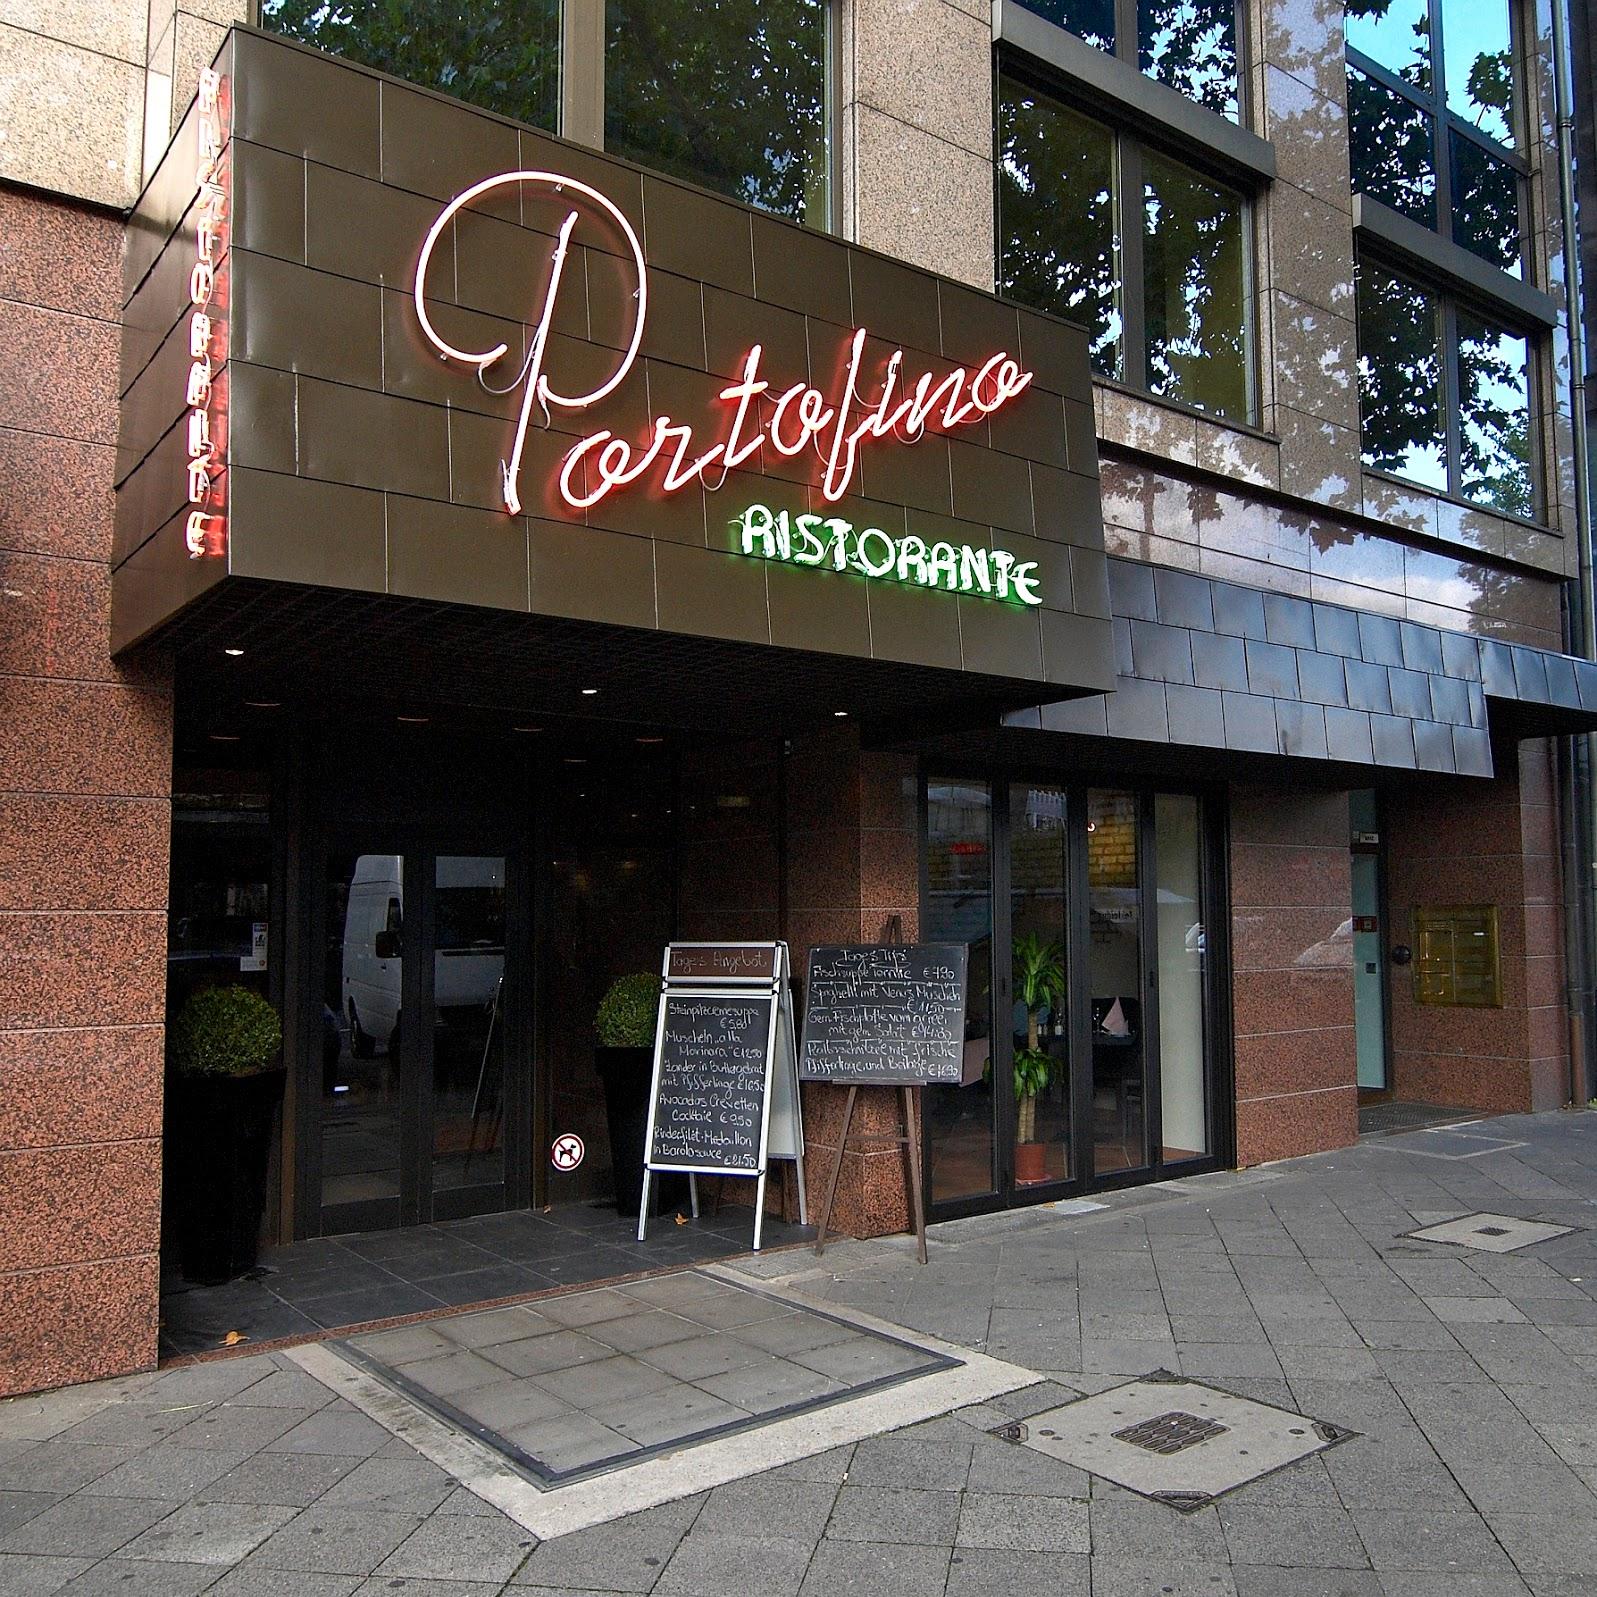 Restaurant "Portofino" in Düsseldorf